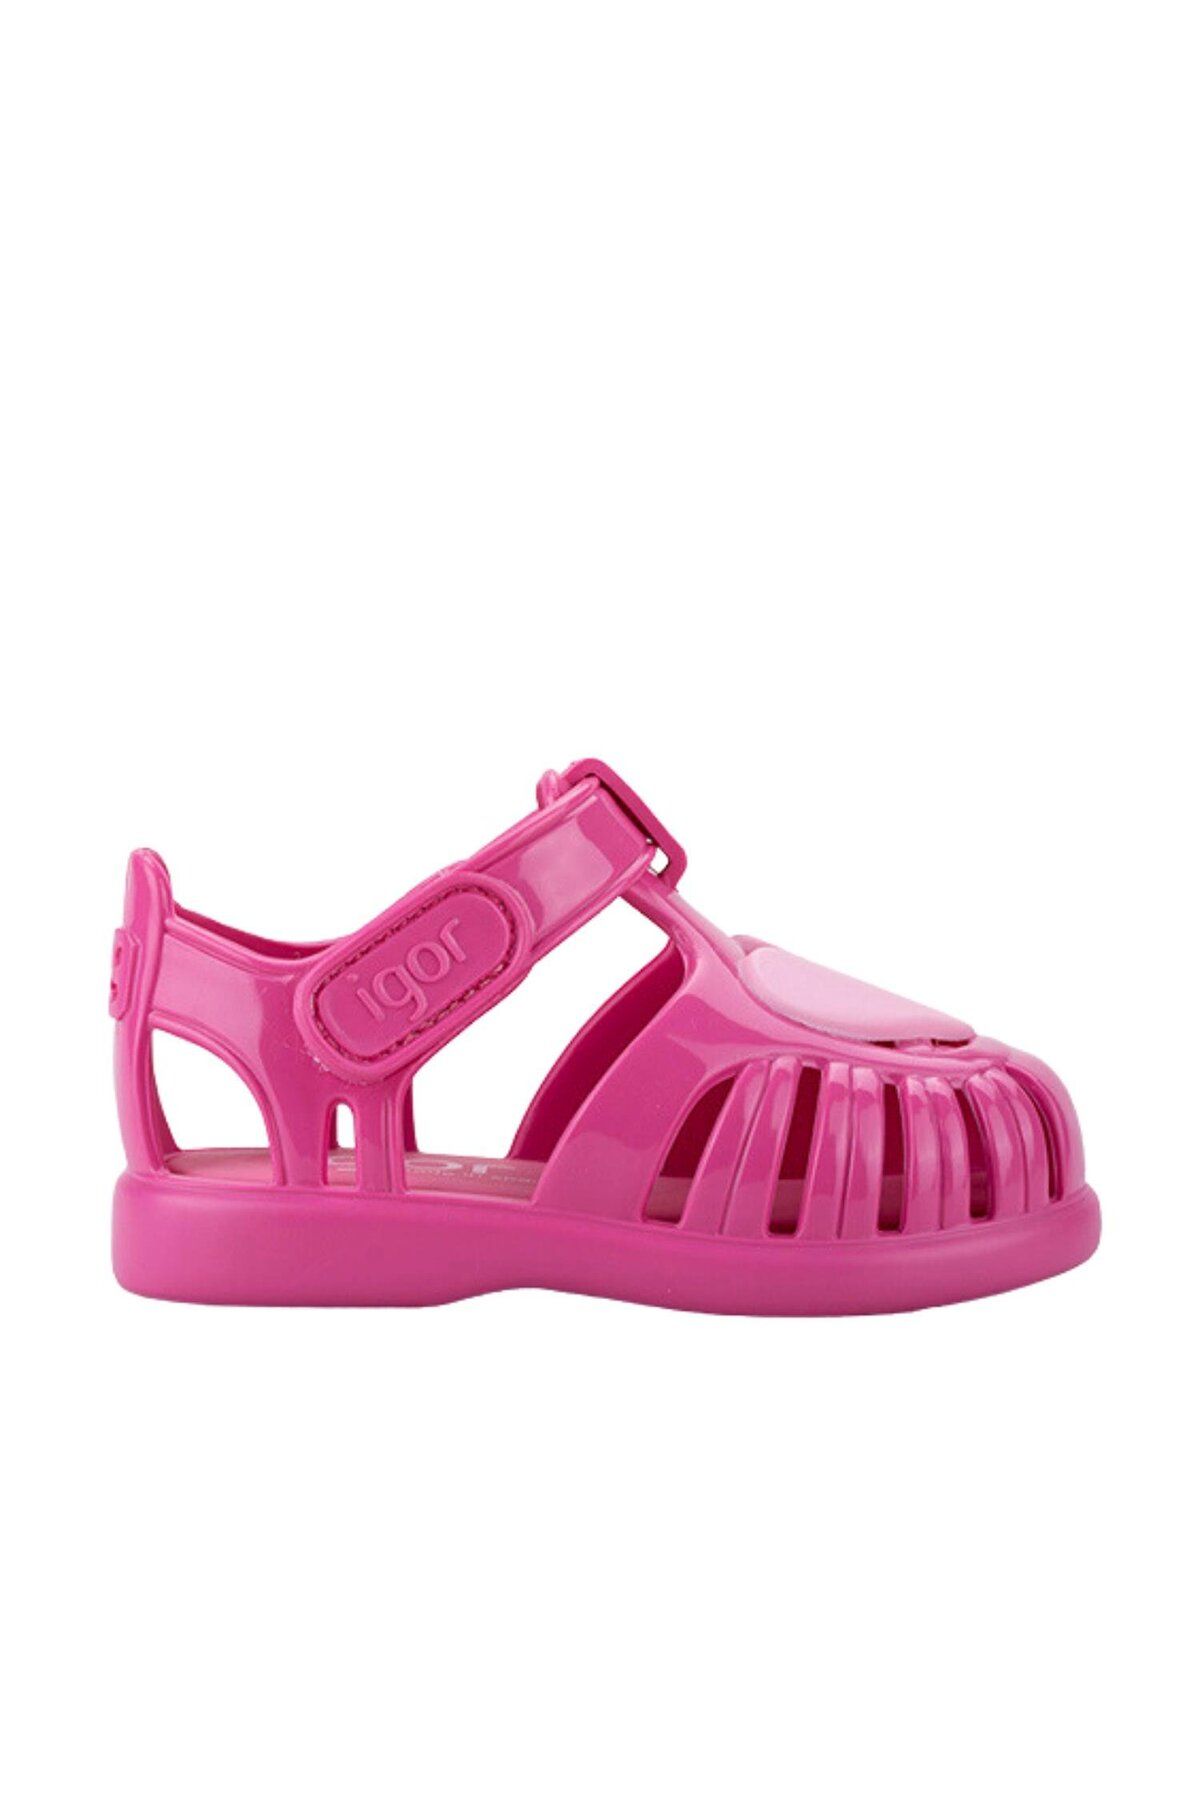 IGOR S10310-007 Tobby Gloss Love Çocuk Sandalet Terlik